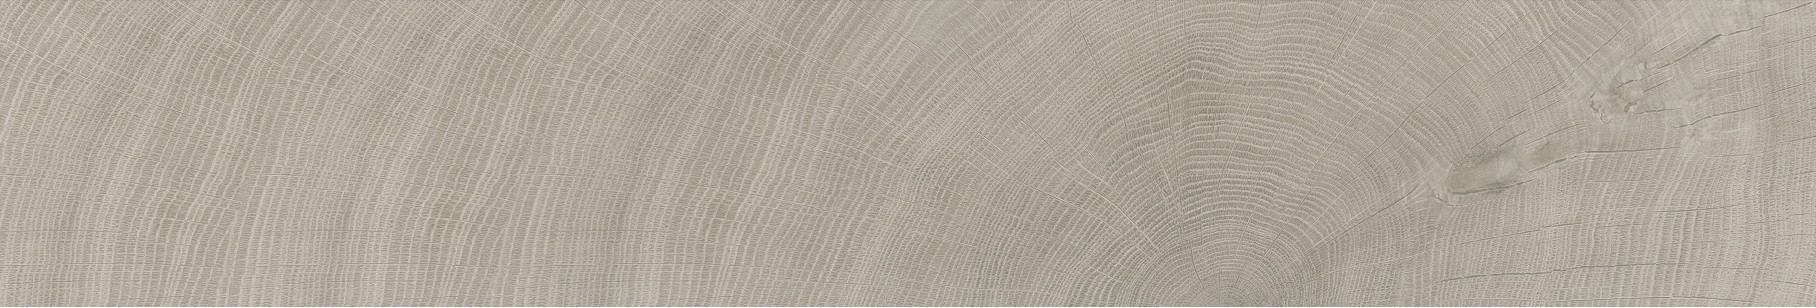 Керамогранит Moreroom Stone Wood Tile Tree-Ring серый 25х150 C2515